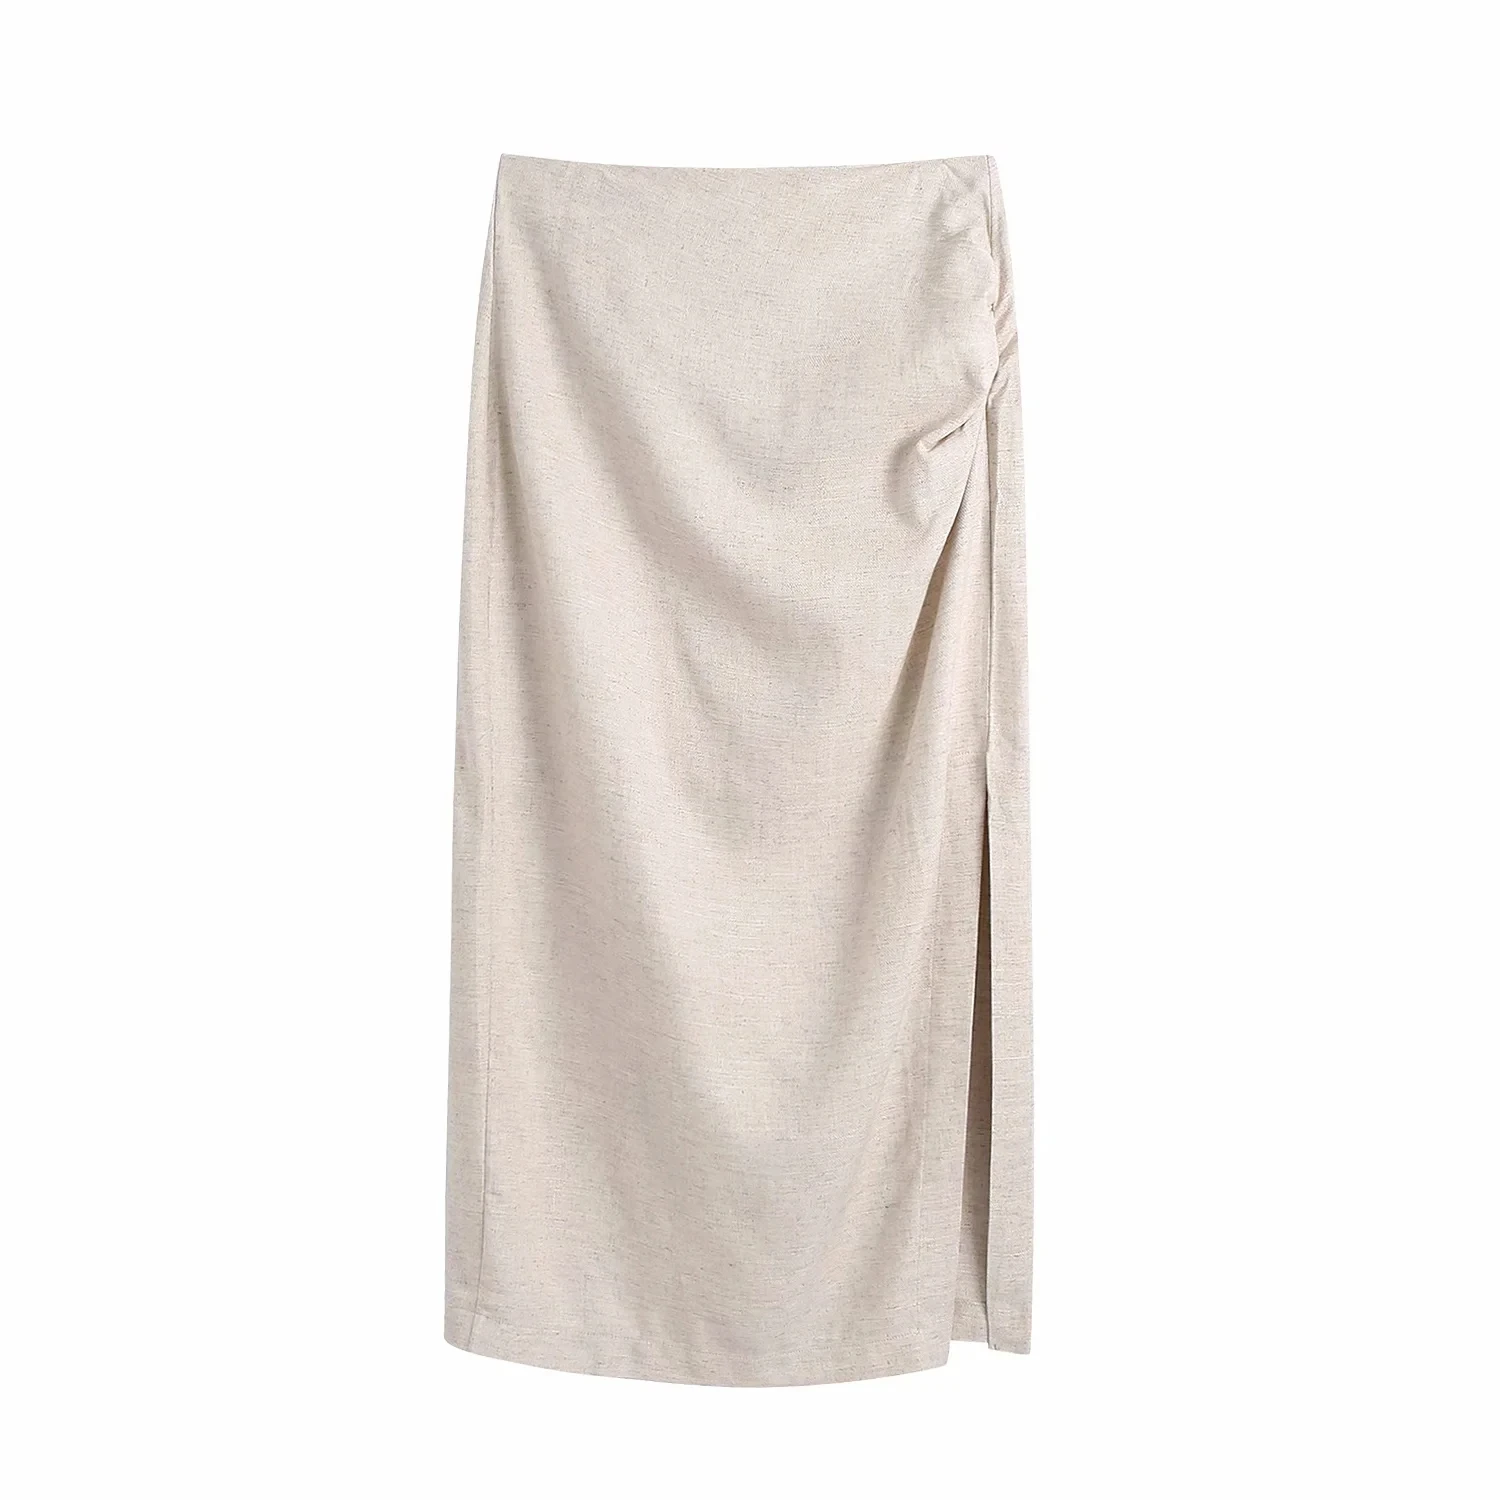 

XNWMNZ Za Summer Faldas Women elegance linen Midi Skirt Ruched High Waist A-line Skirts Slit split Middle length Skirts Female